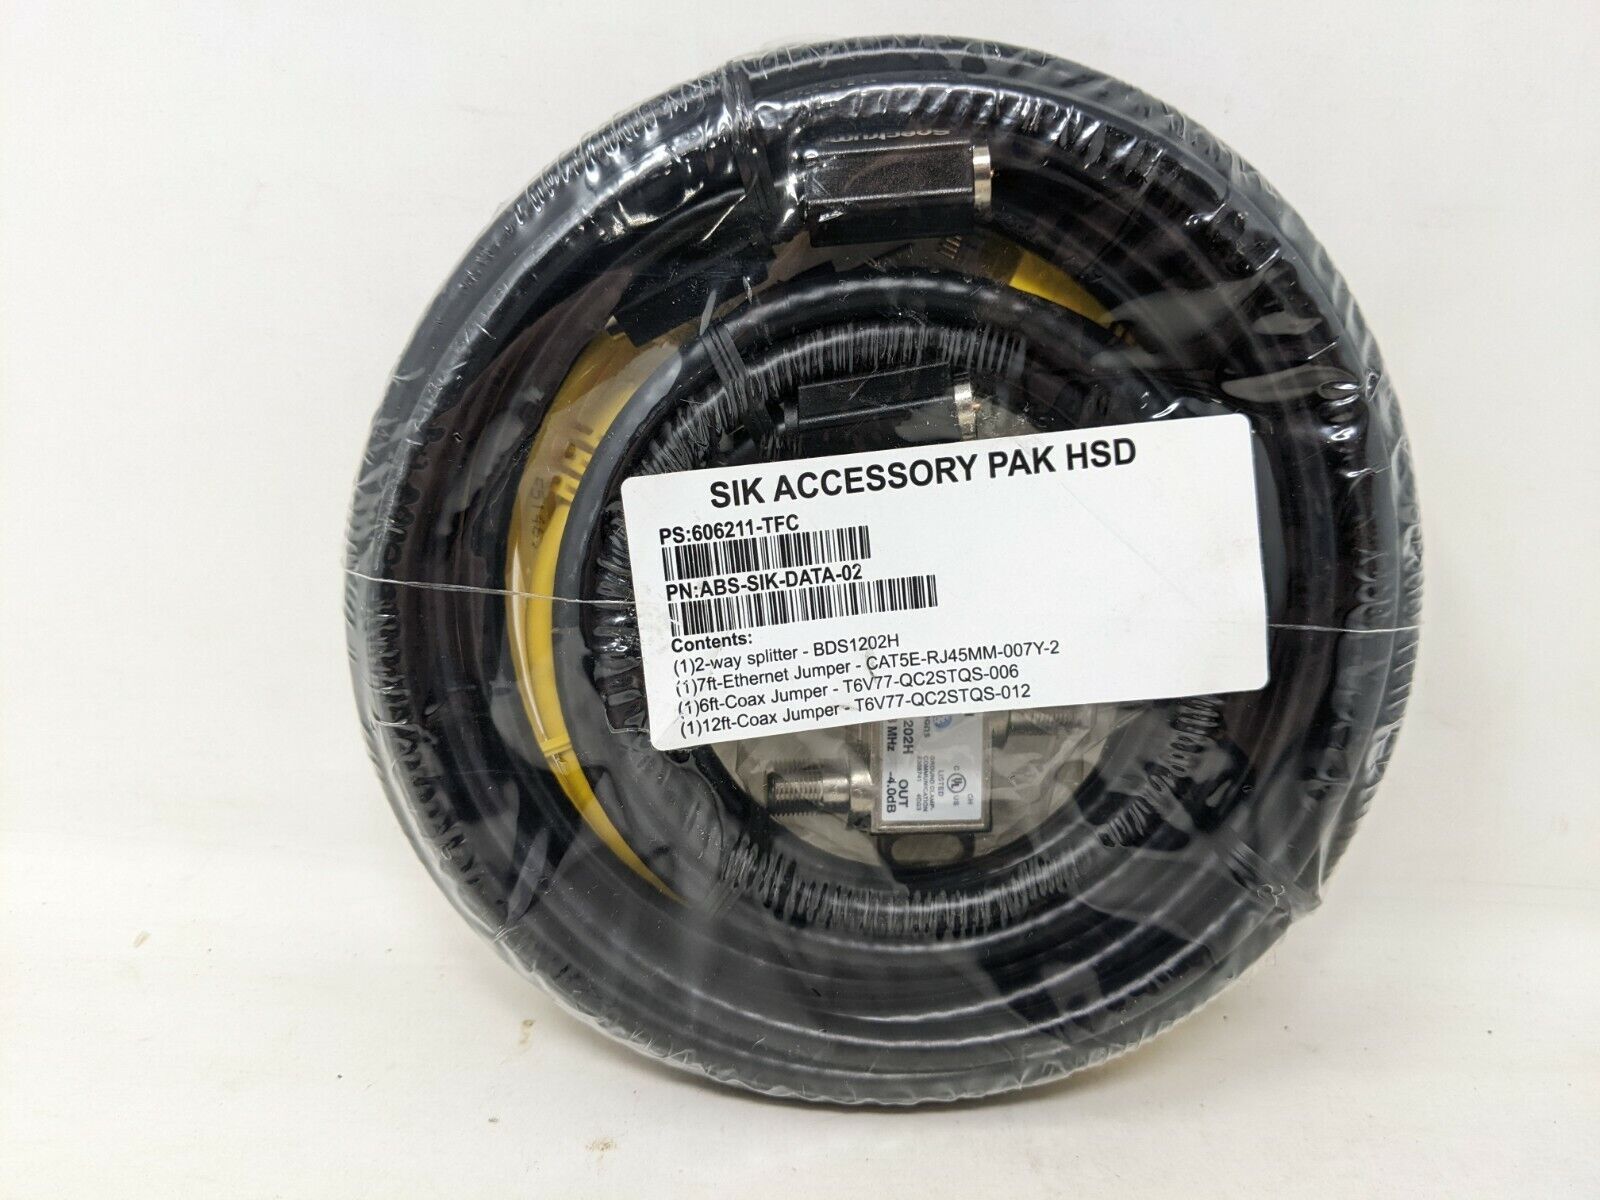 SIK Accessory Pak HSD - Spectrum - Amphenol - ABS-SIK-DATA-02